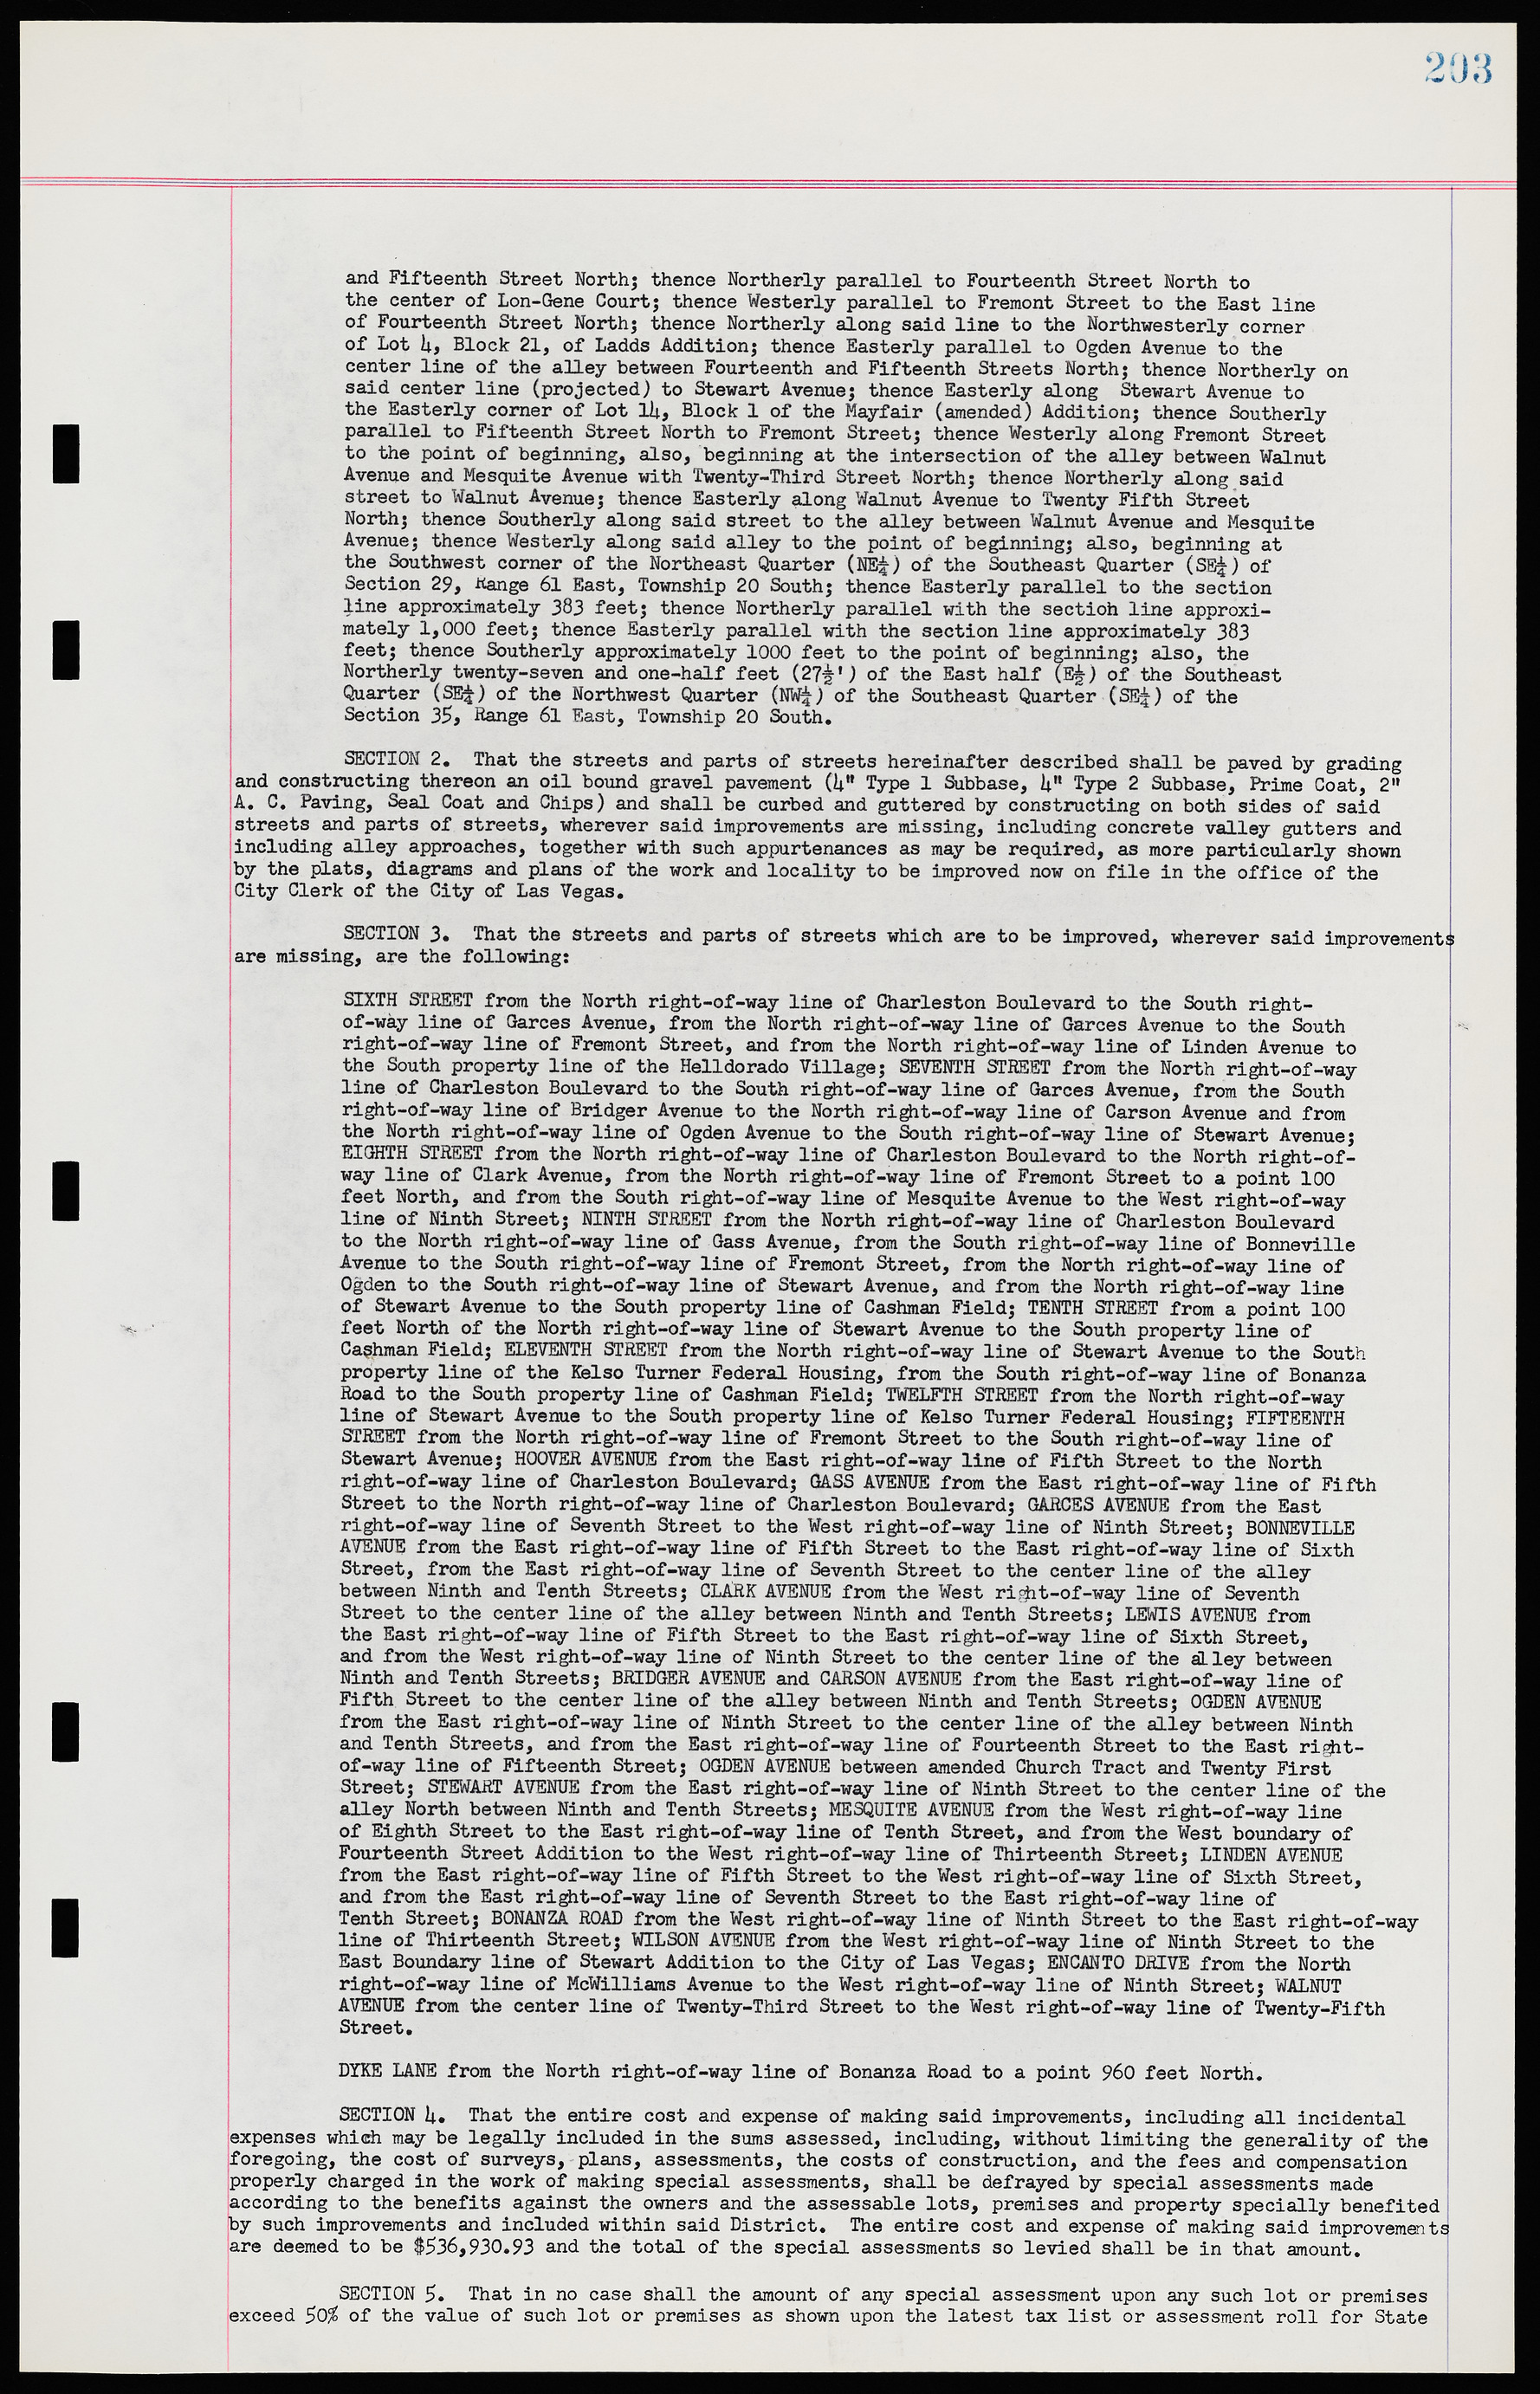 Las Vegas City Ordinances, November 13, 1950 to August 6, 1958, lvc000015-211